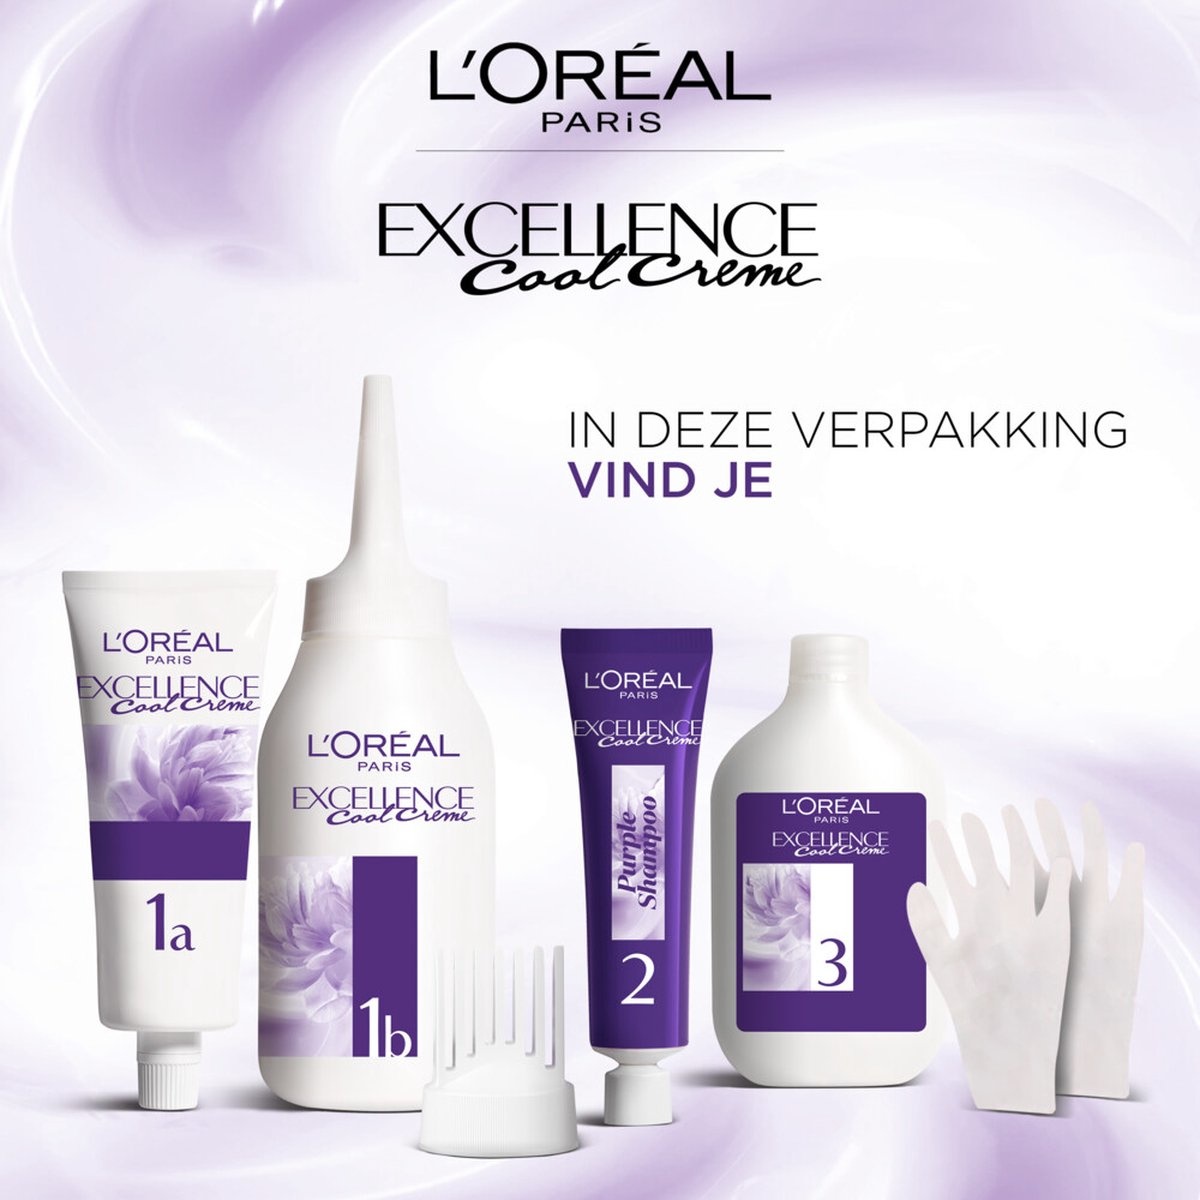 L'Oréal Paris Excellence Cool Creams 4.11 - Ultra Ash Brown - Permanent hair dye - Packaging damaged